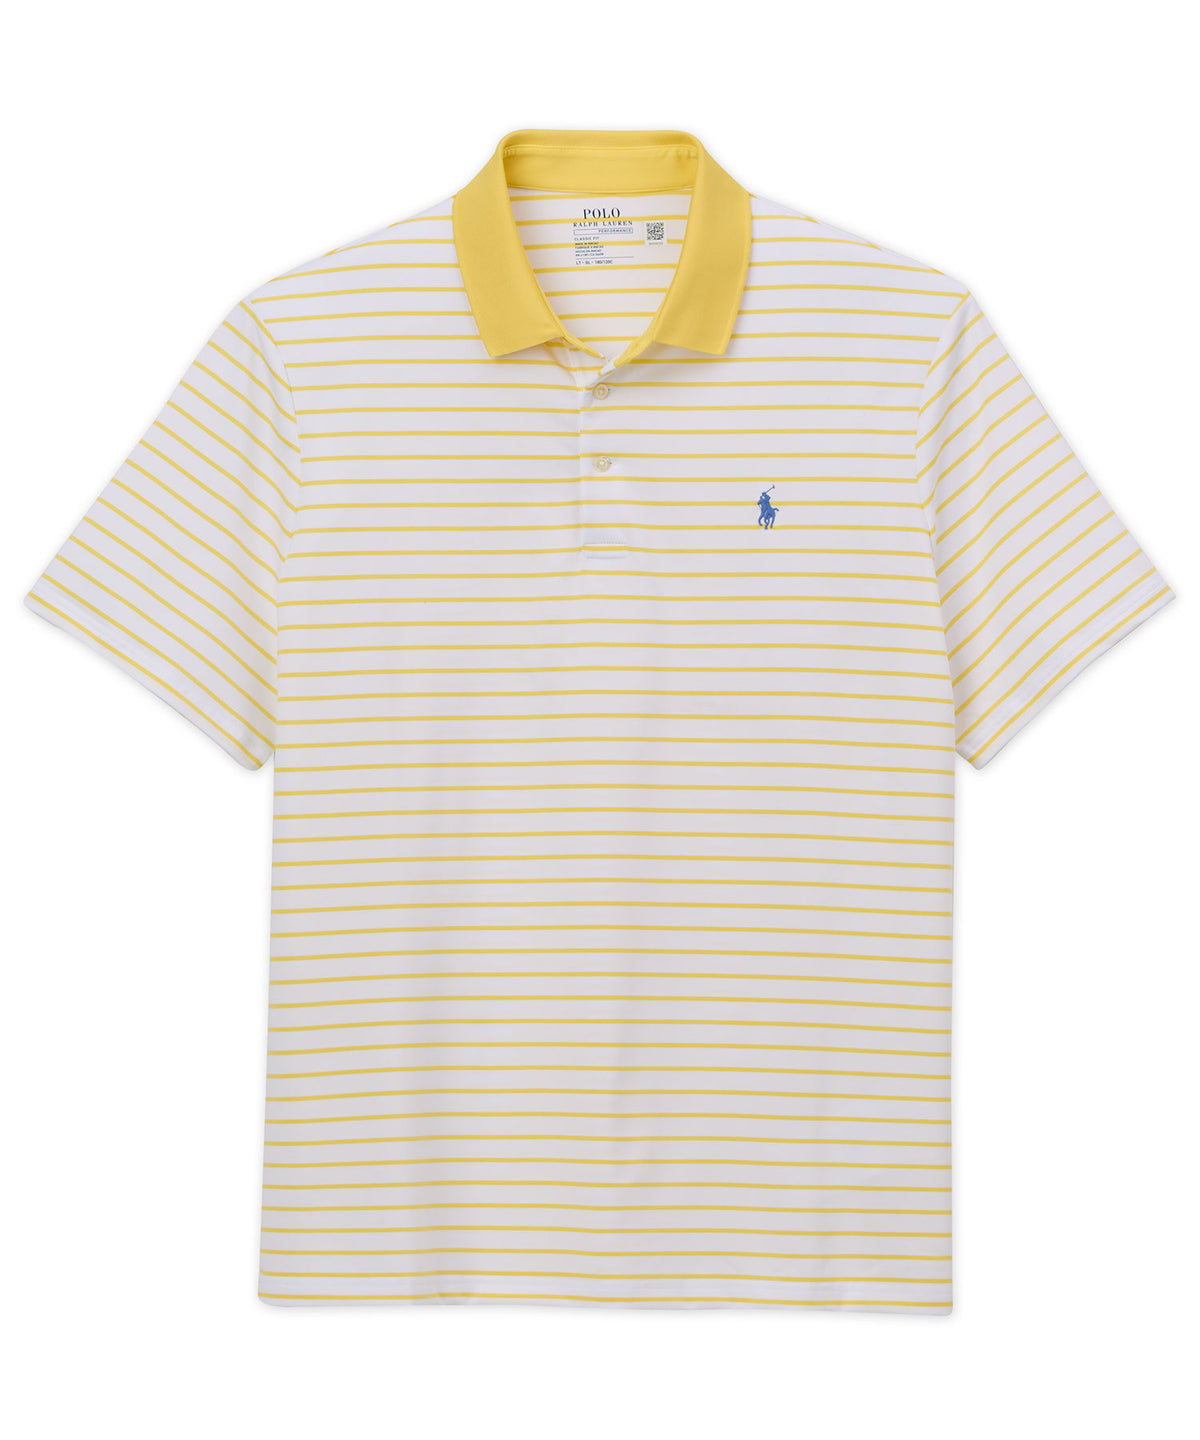 Polo Ralph Lauren Short Sleeve Stripe Performance Polo Knit Shirt, Big & Tall